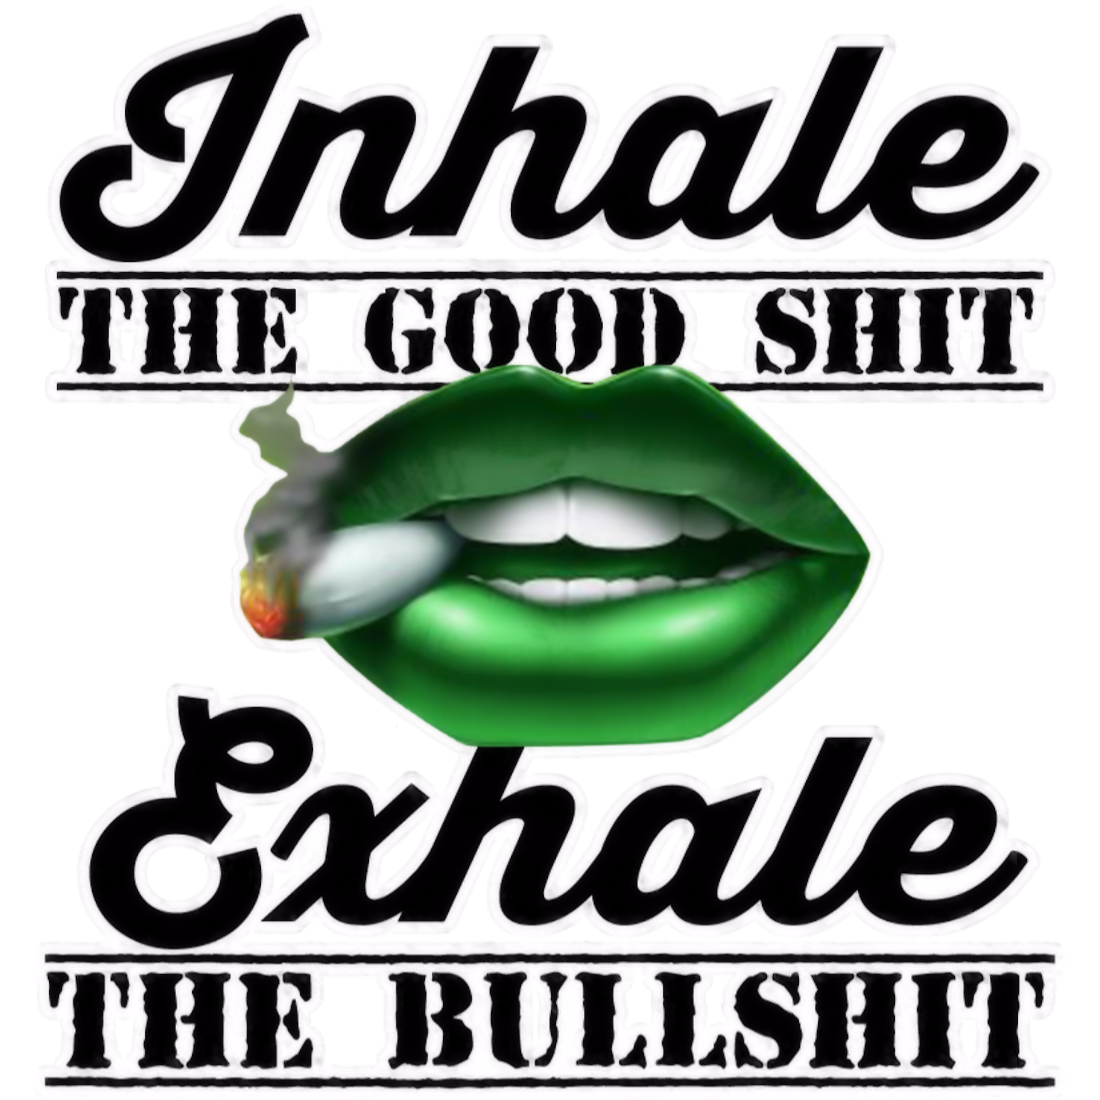 Inhale Good, Exhale Bullshit